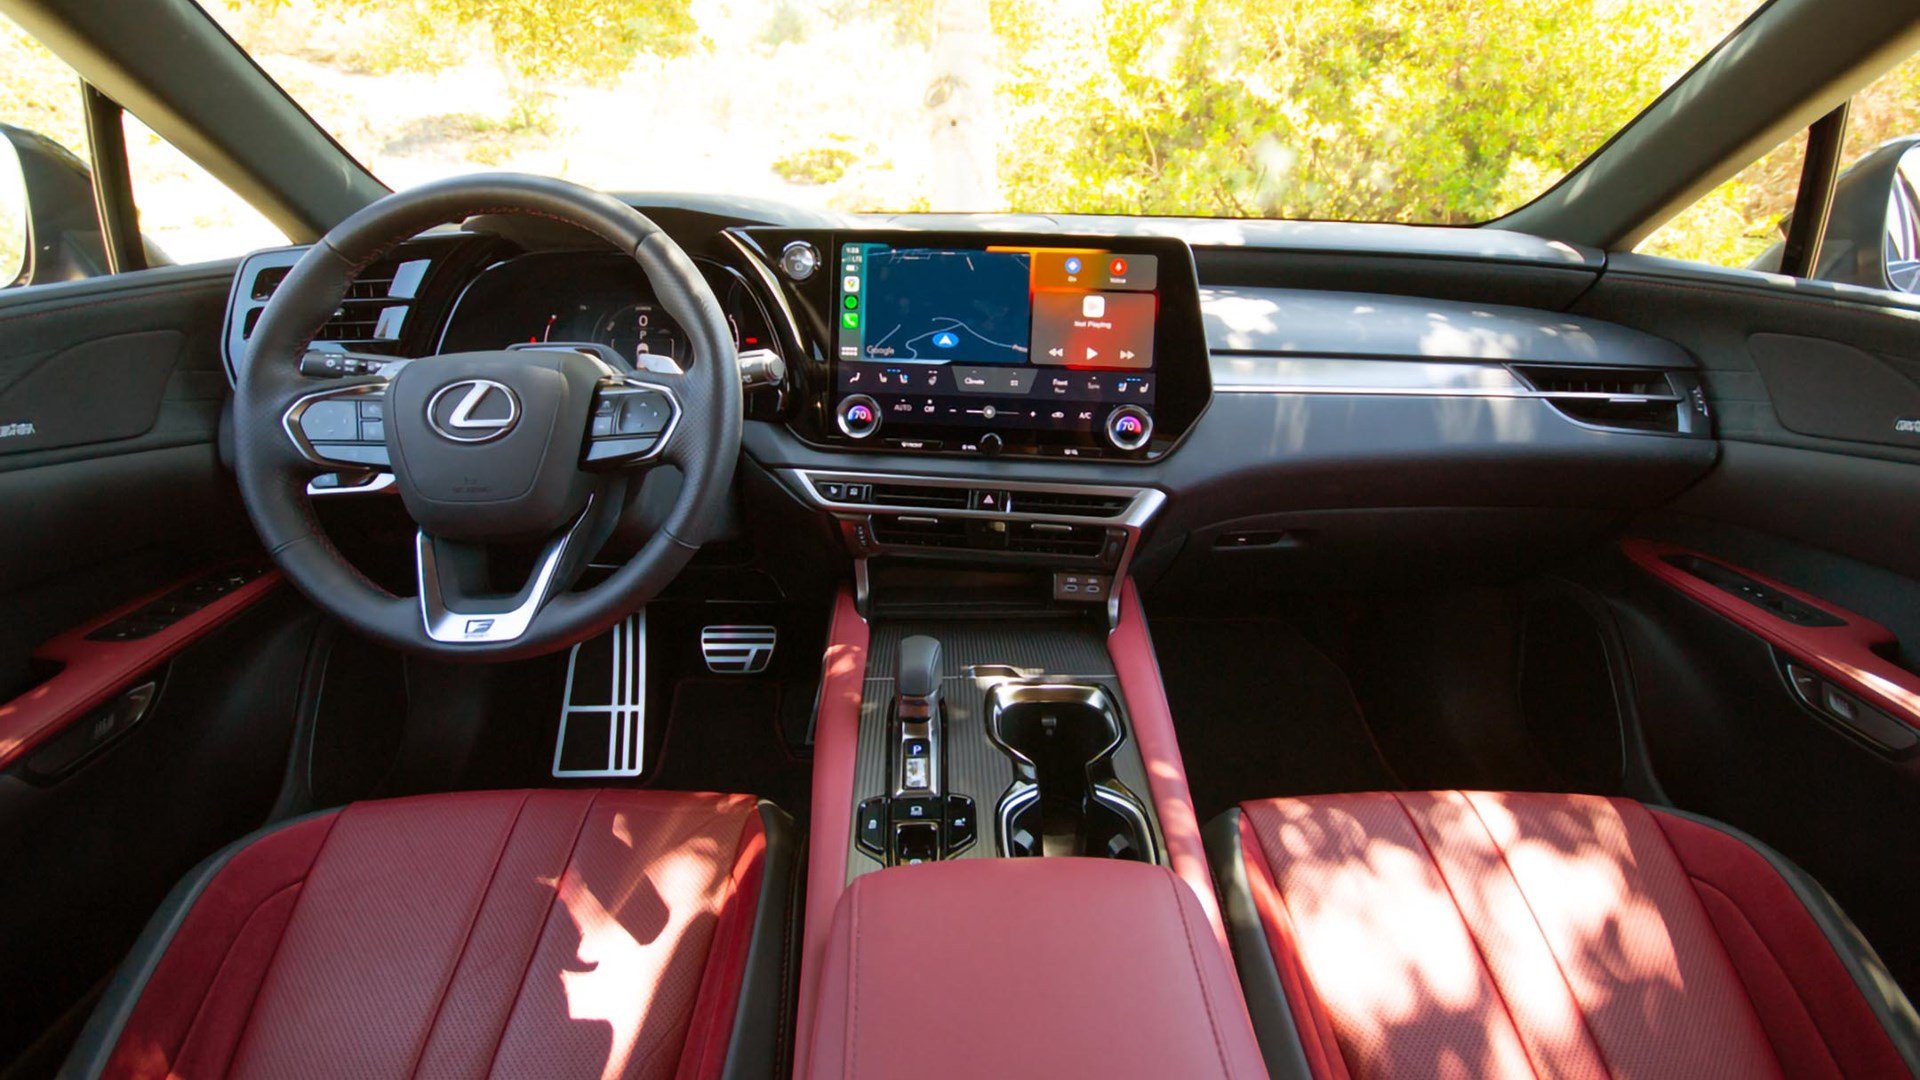 Lexus RX 400 interior - Cockpit